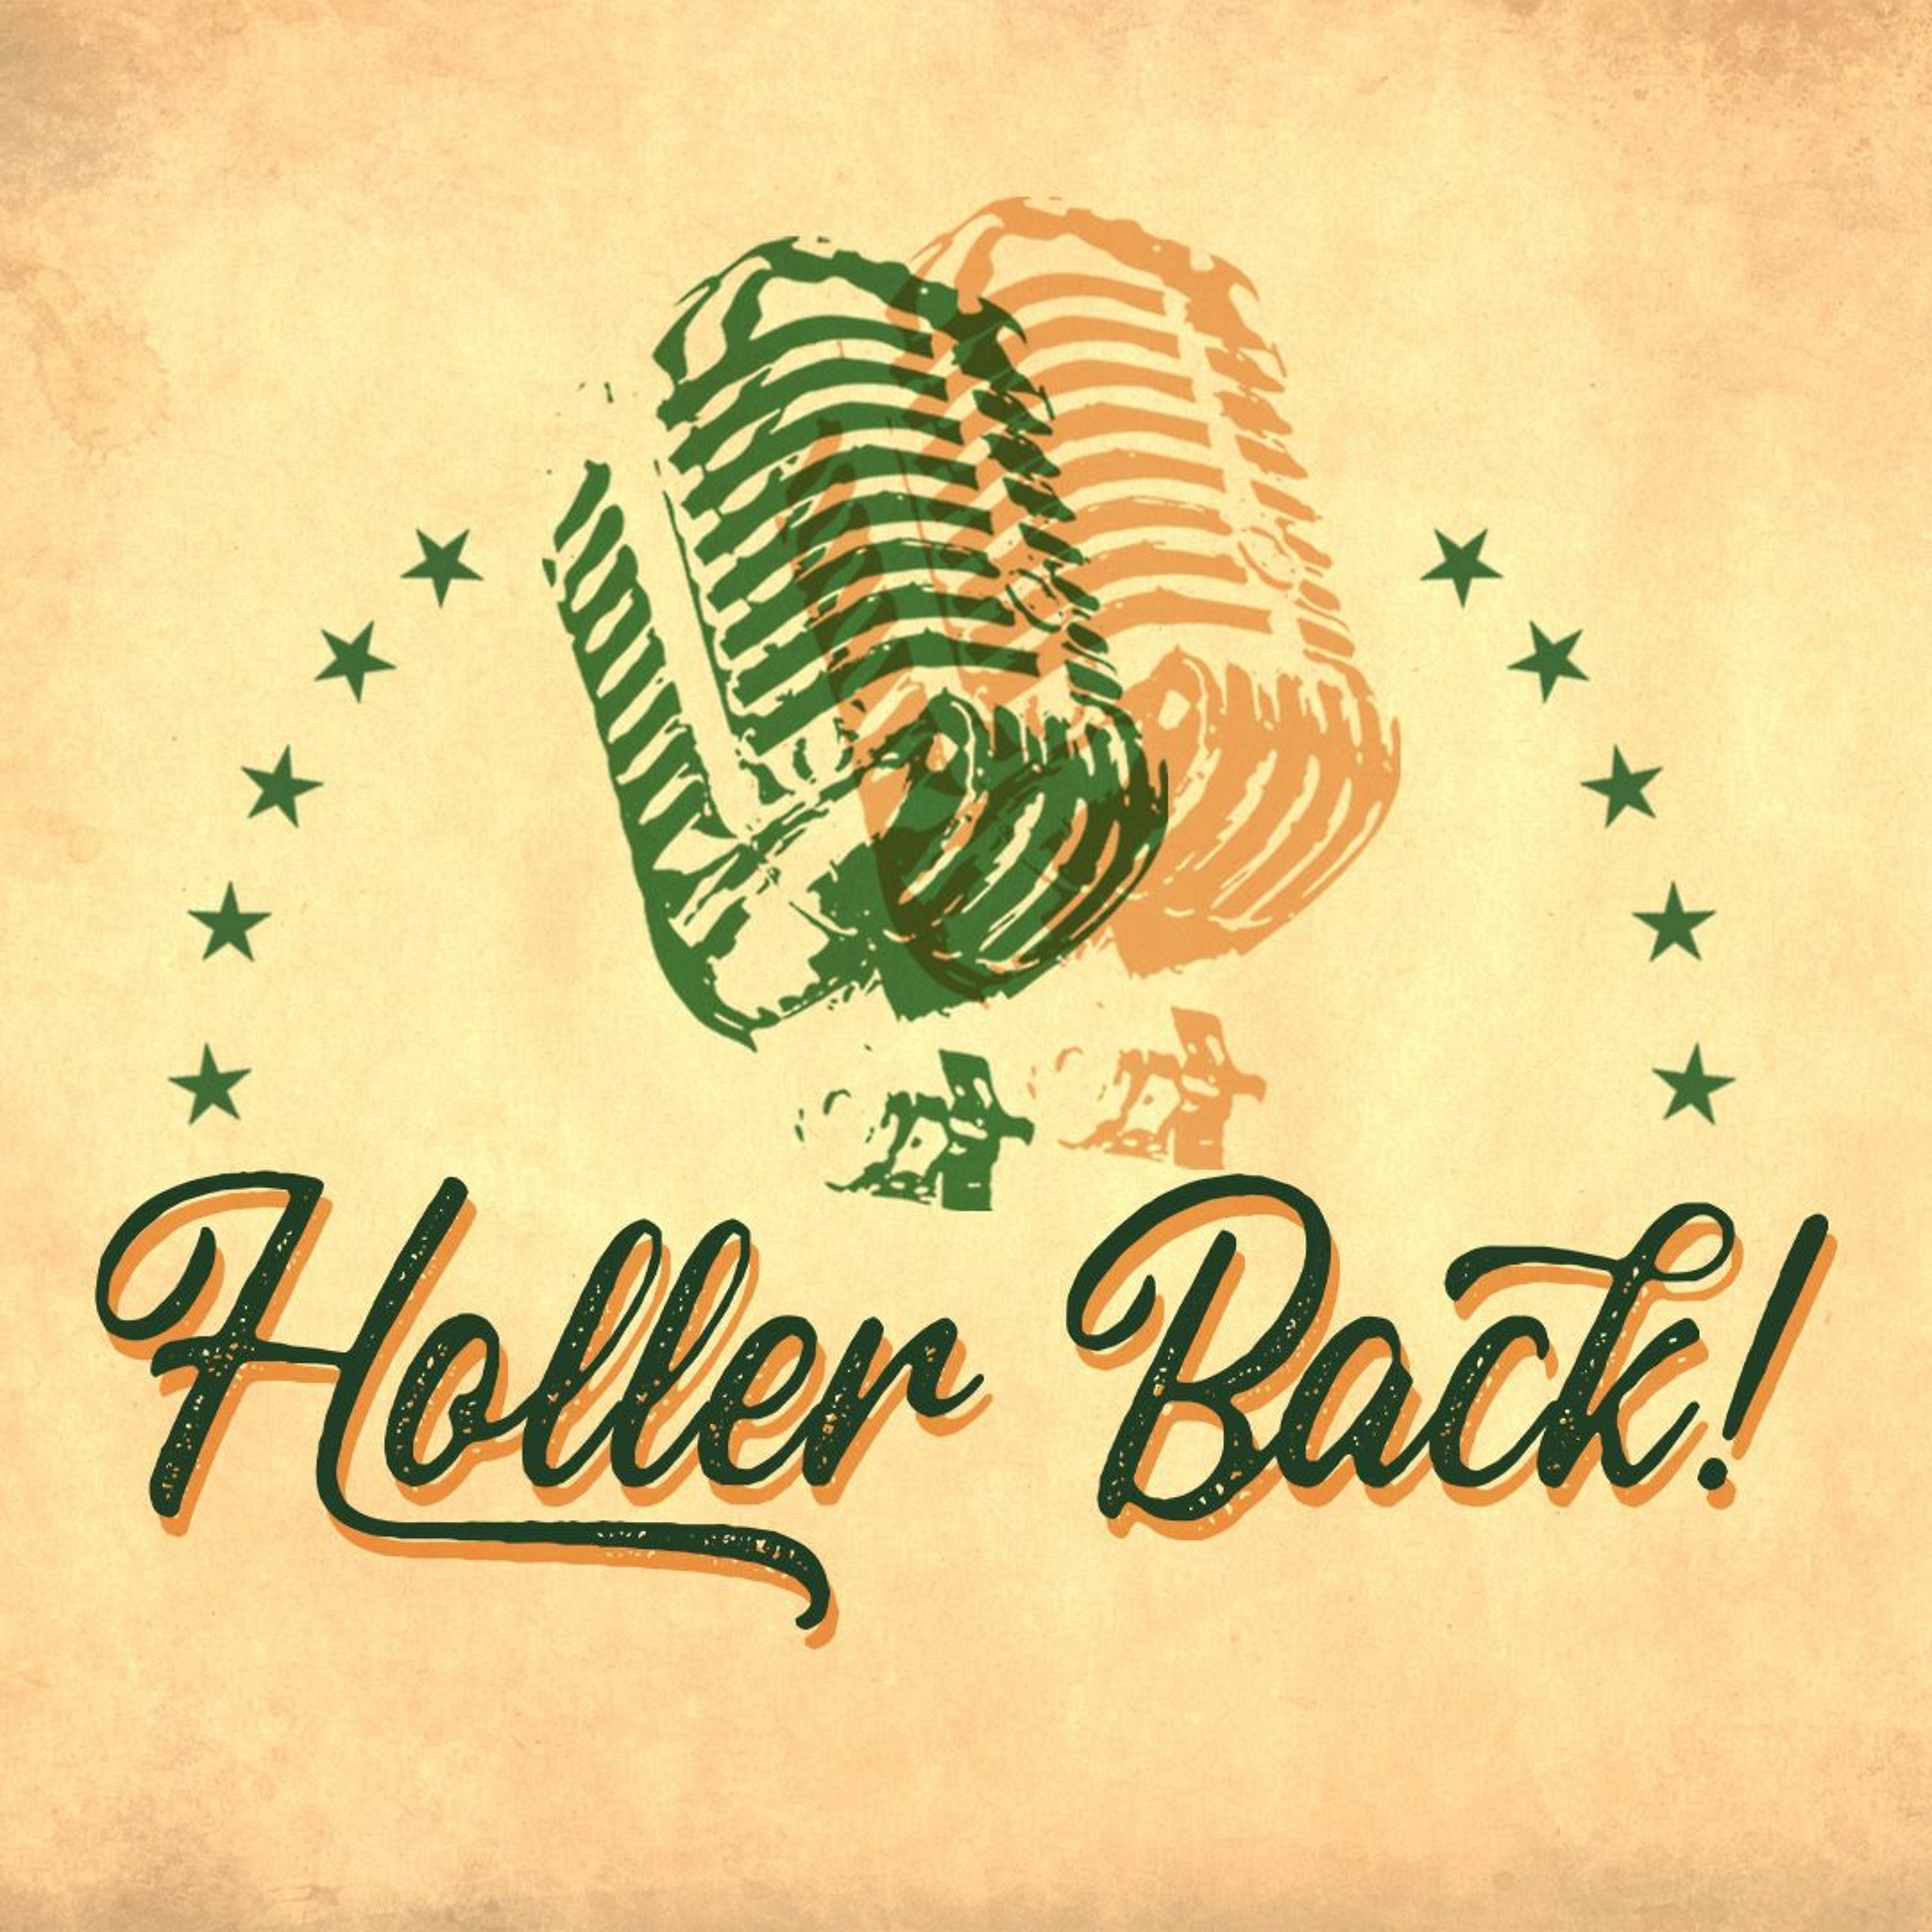 Holler Back! Season 4. Episode 2: Student Experiences: AppCorps Program